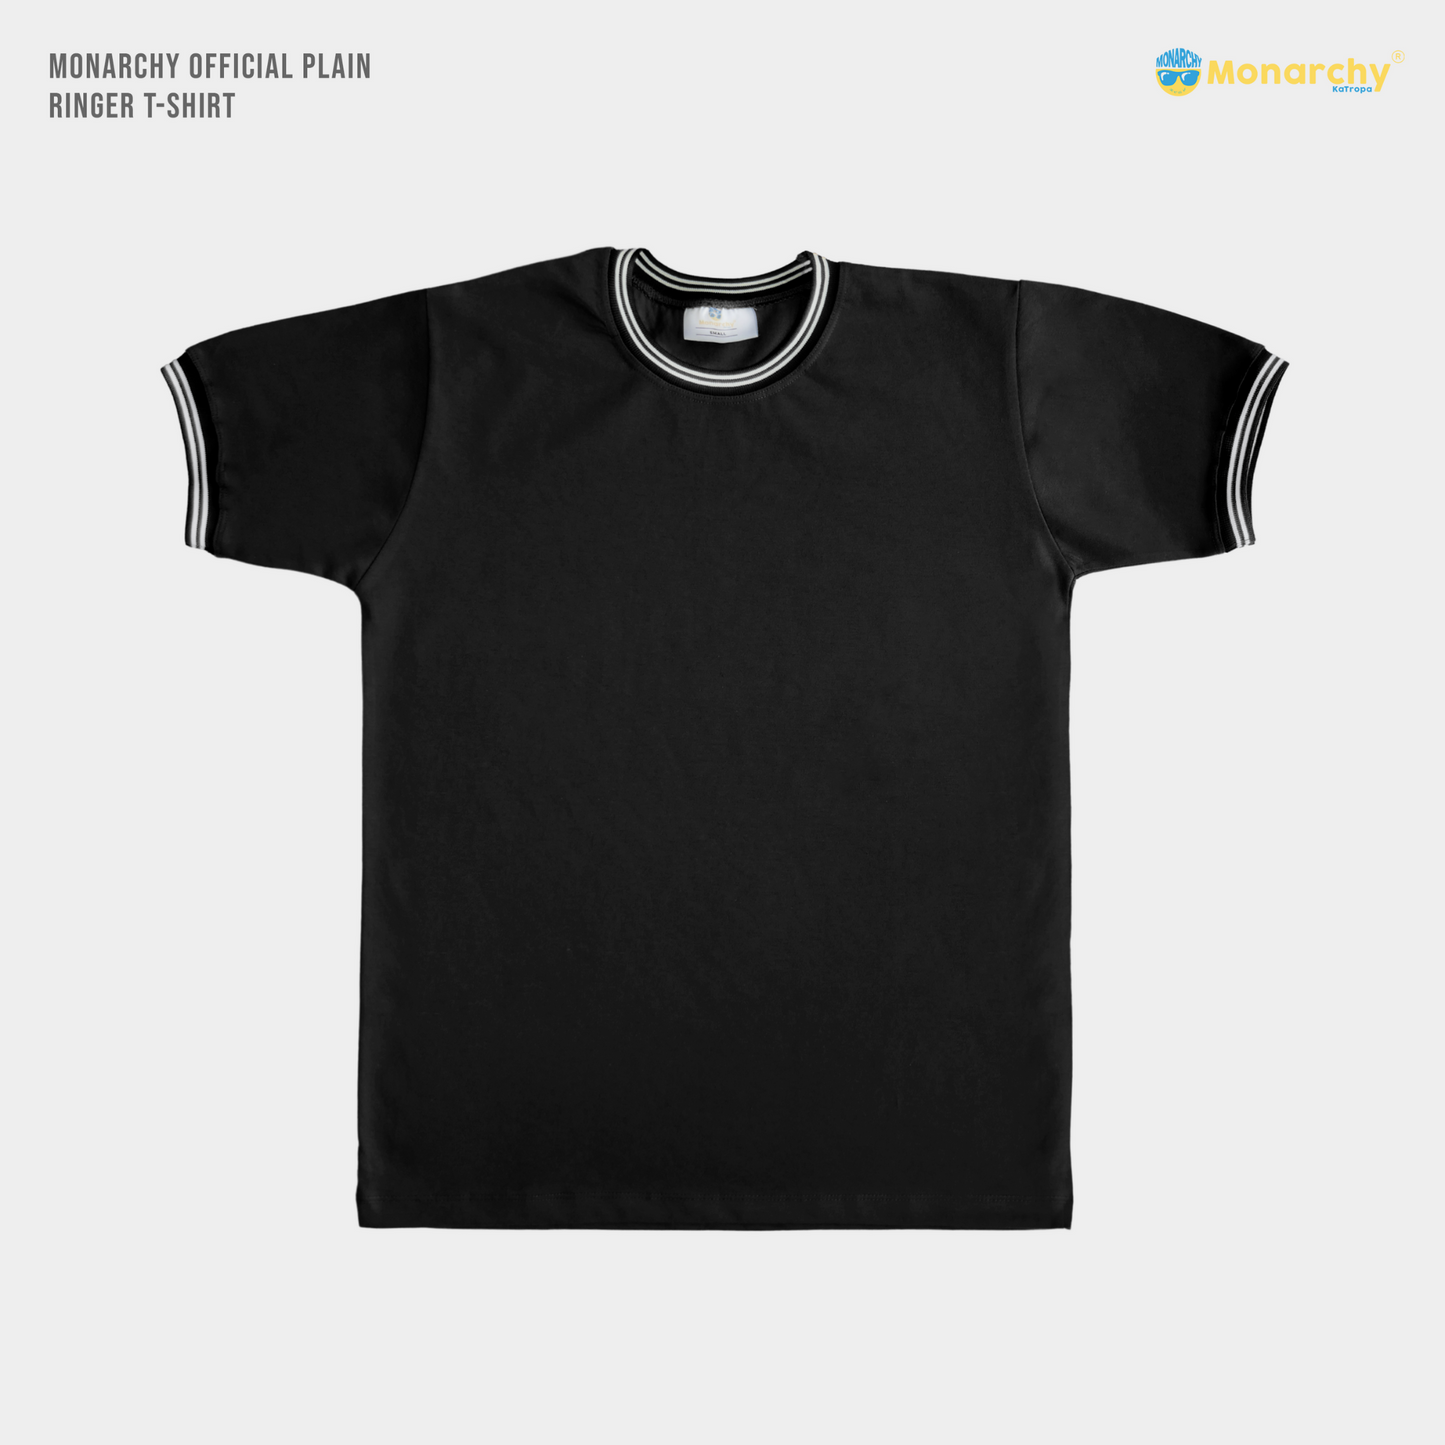 Monarchy Official Plain Ringer Shirt | tshirt for men